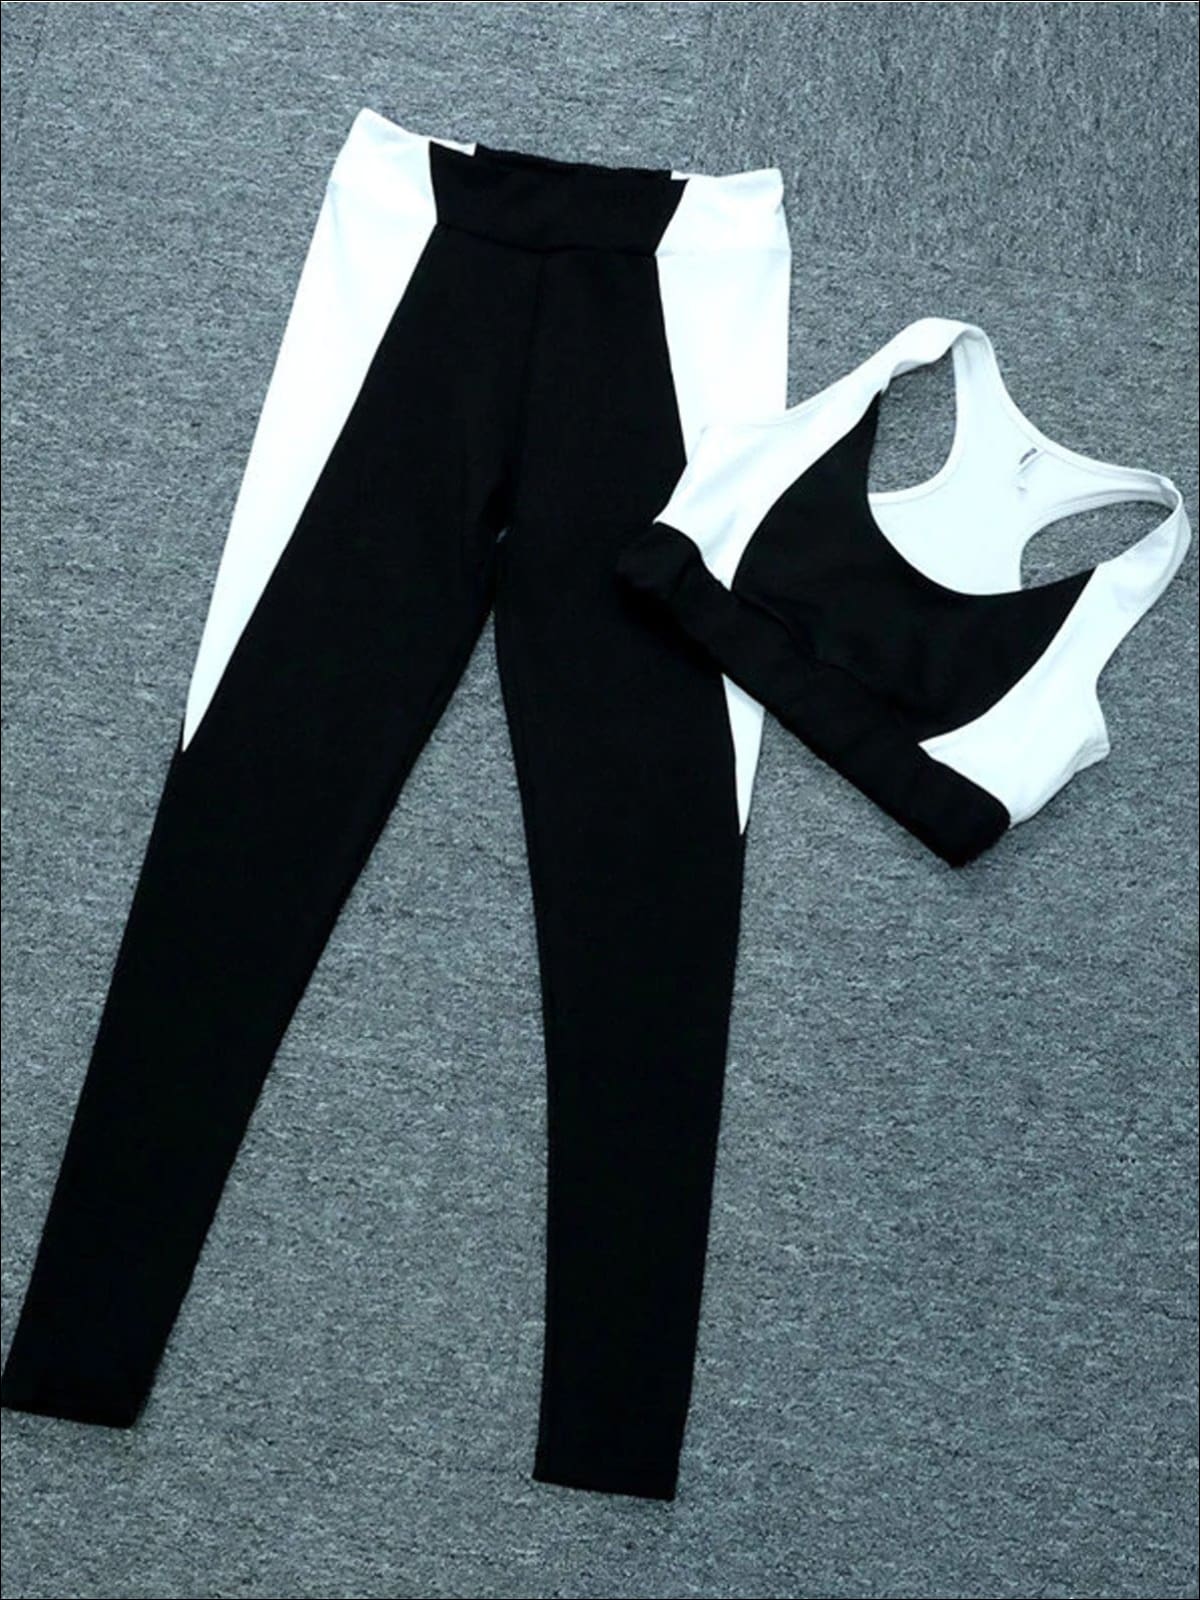 https://cdn.shopify.com/s/files/1/0996/1812/products/womens-black-white-sports-bra-leggings-set-20-39-99-40-59-bfcutoff-dropified-activewear-mia-belle-overseas-fulfillment-baby_440.jpg